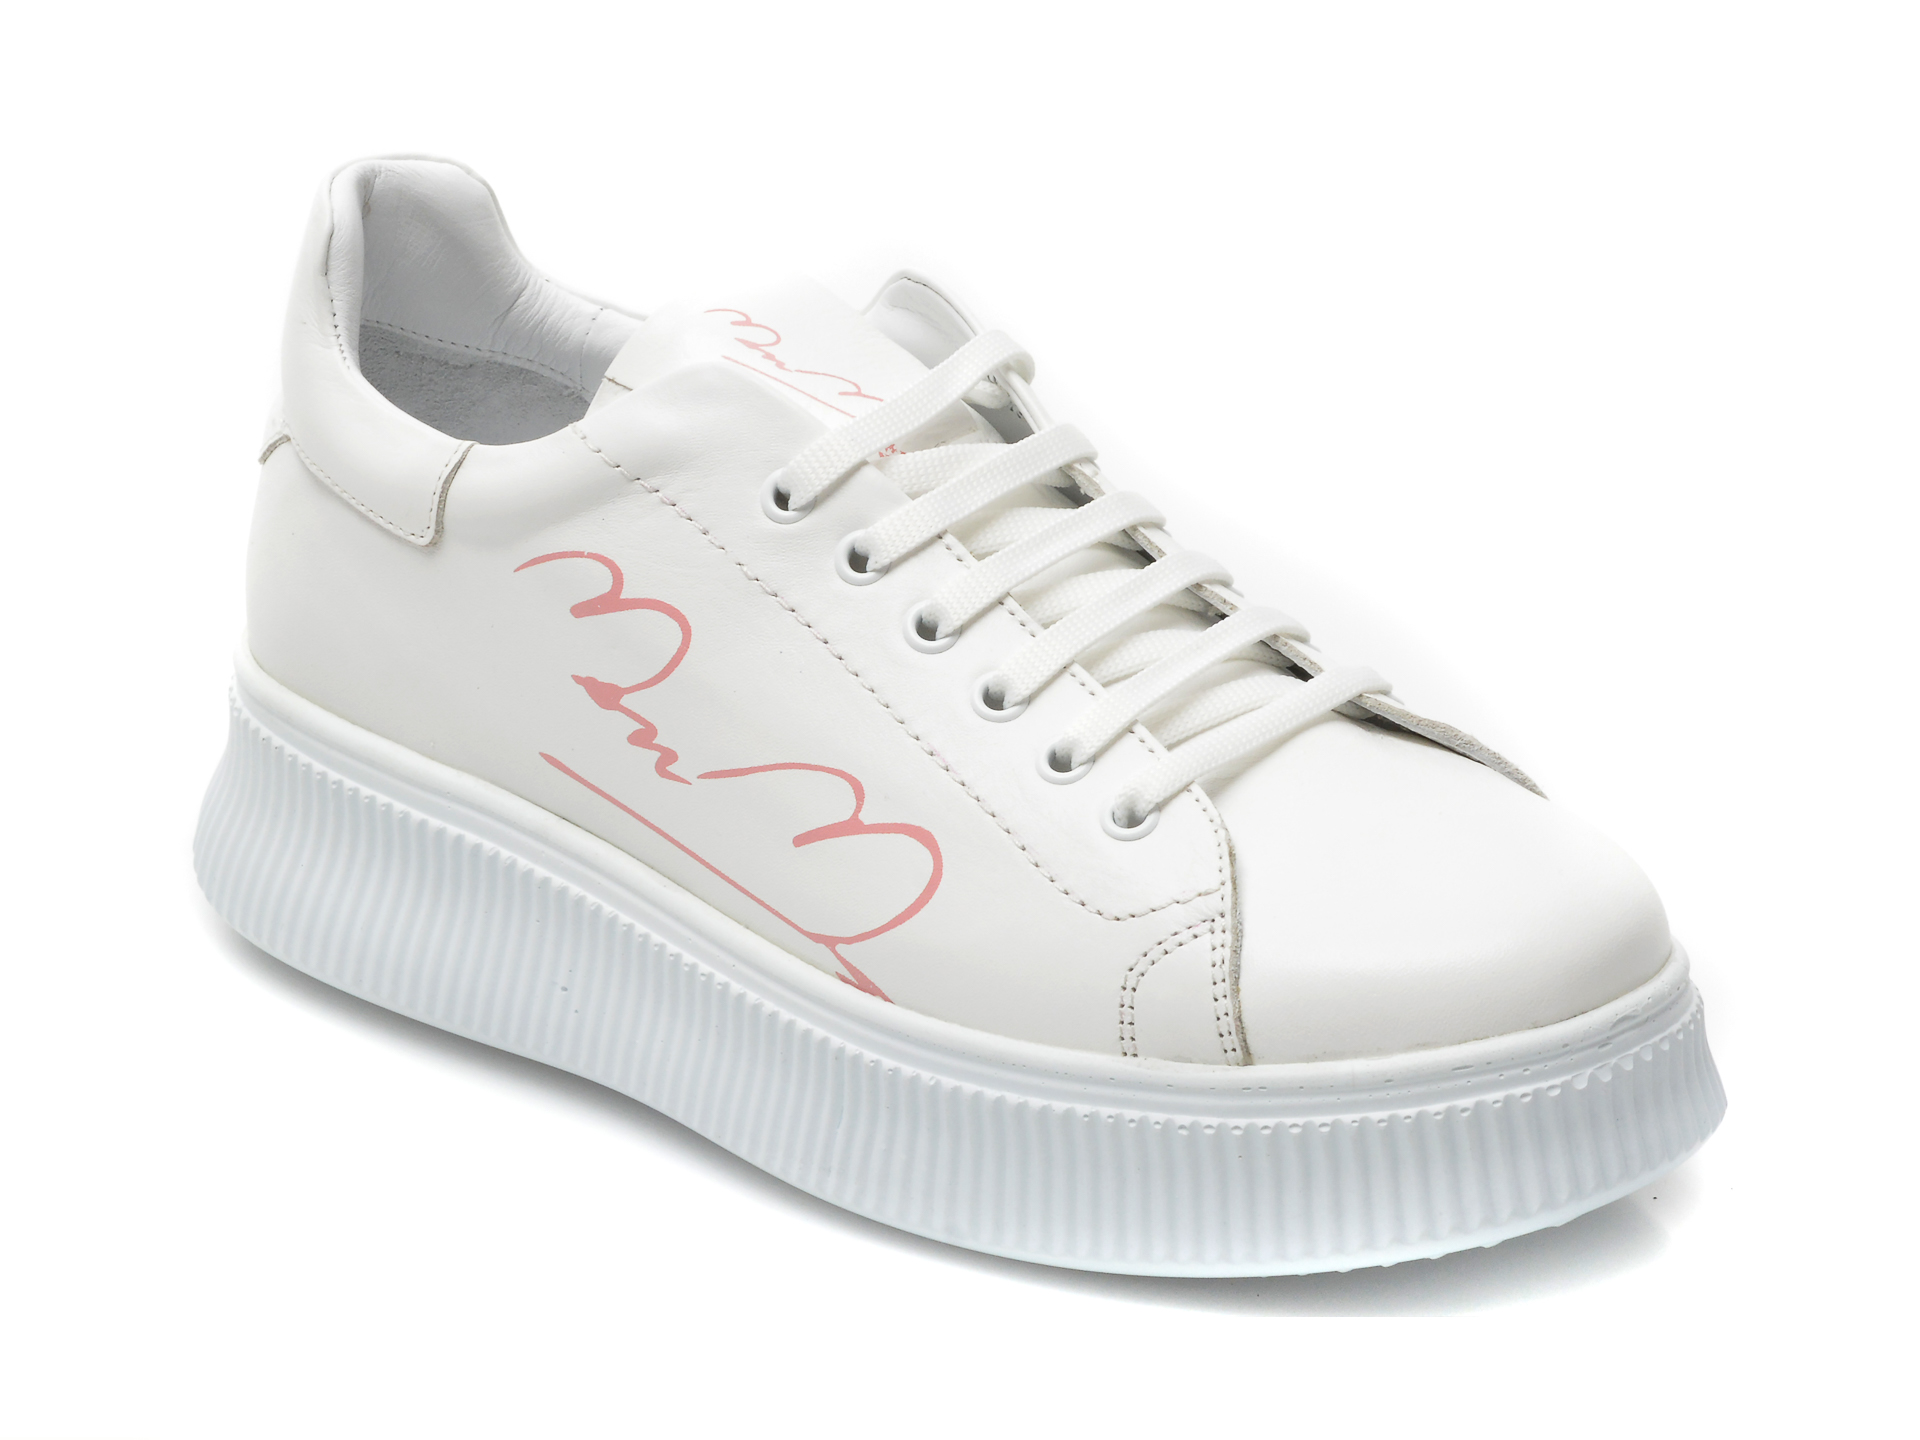 Pantofi sport MAGNOLYA albi, 4209, din piele naturala MAGNOLYA MAGNOLYA